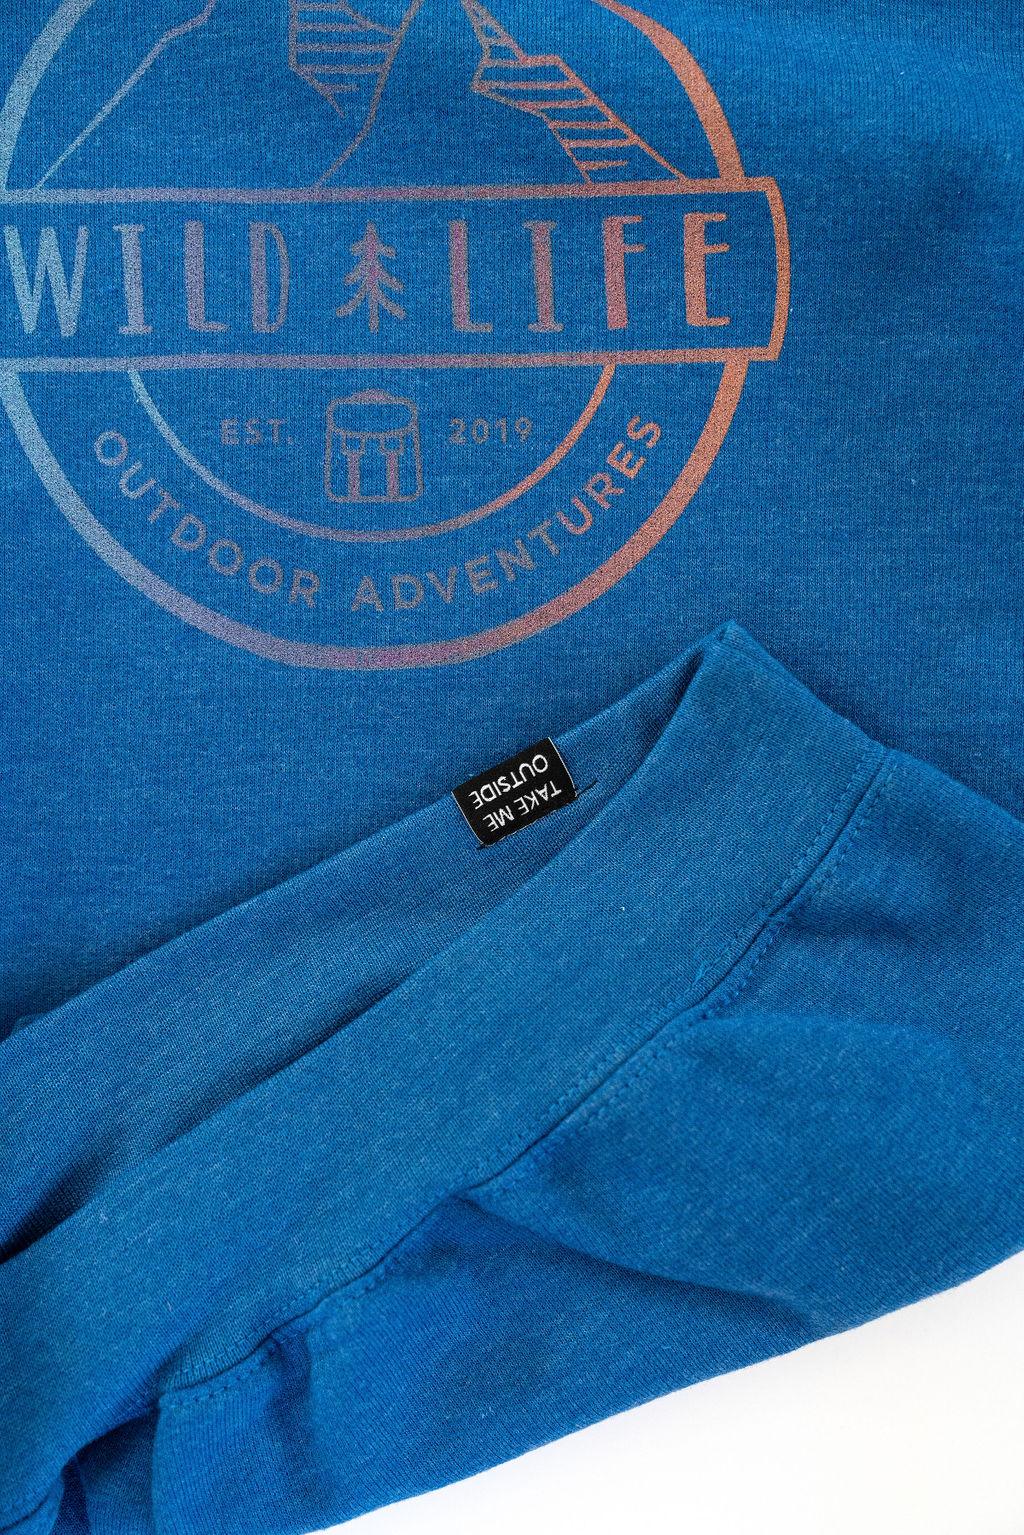 Kids Wild | Life "All Season" Tri-Colour Crest Logo Hoodie - Wild | Life Outdoor Adventures